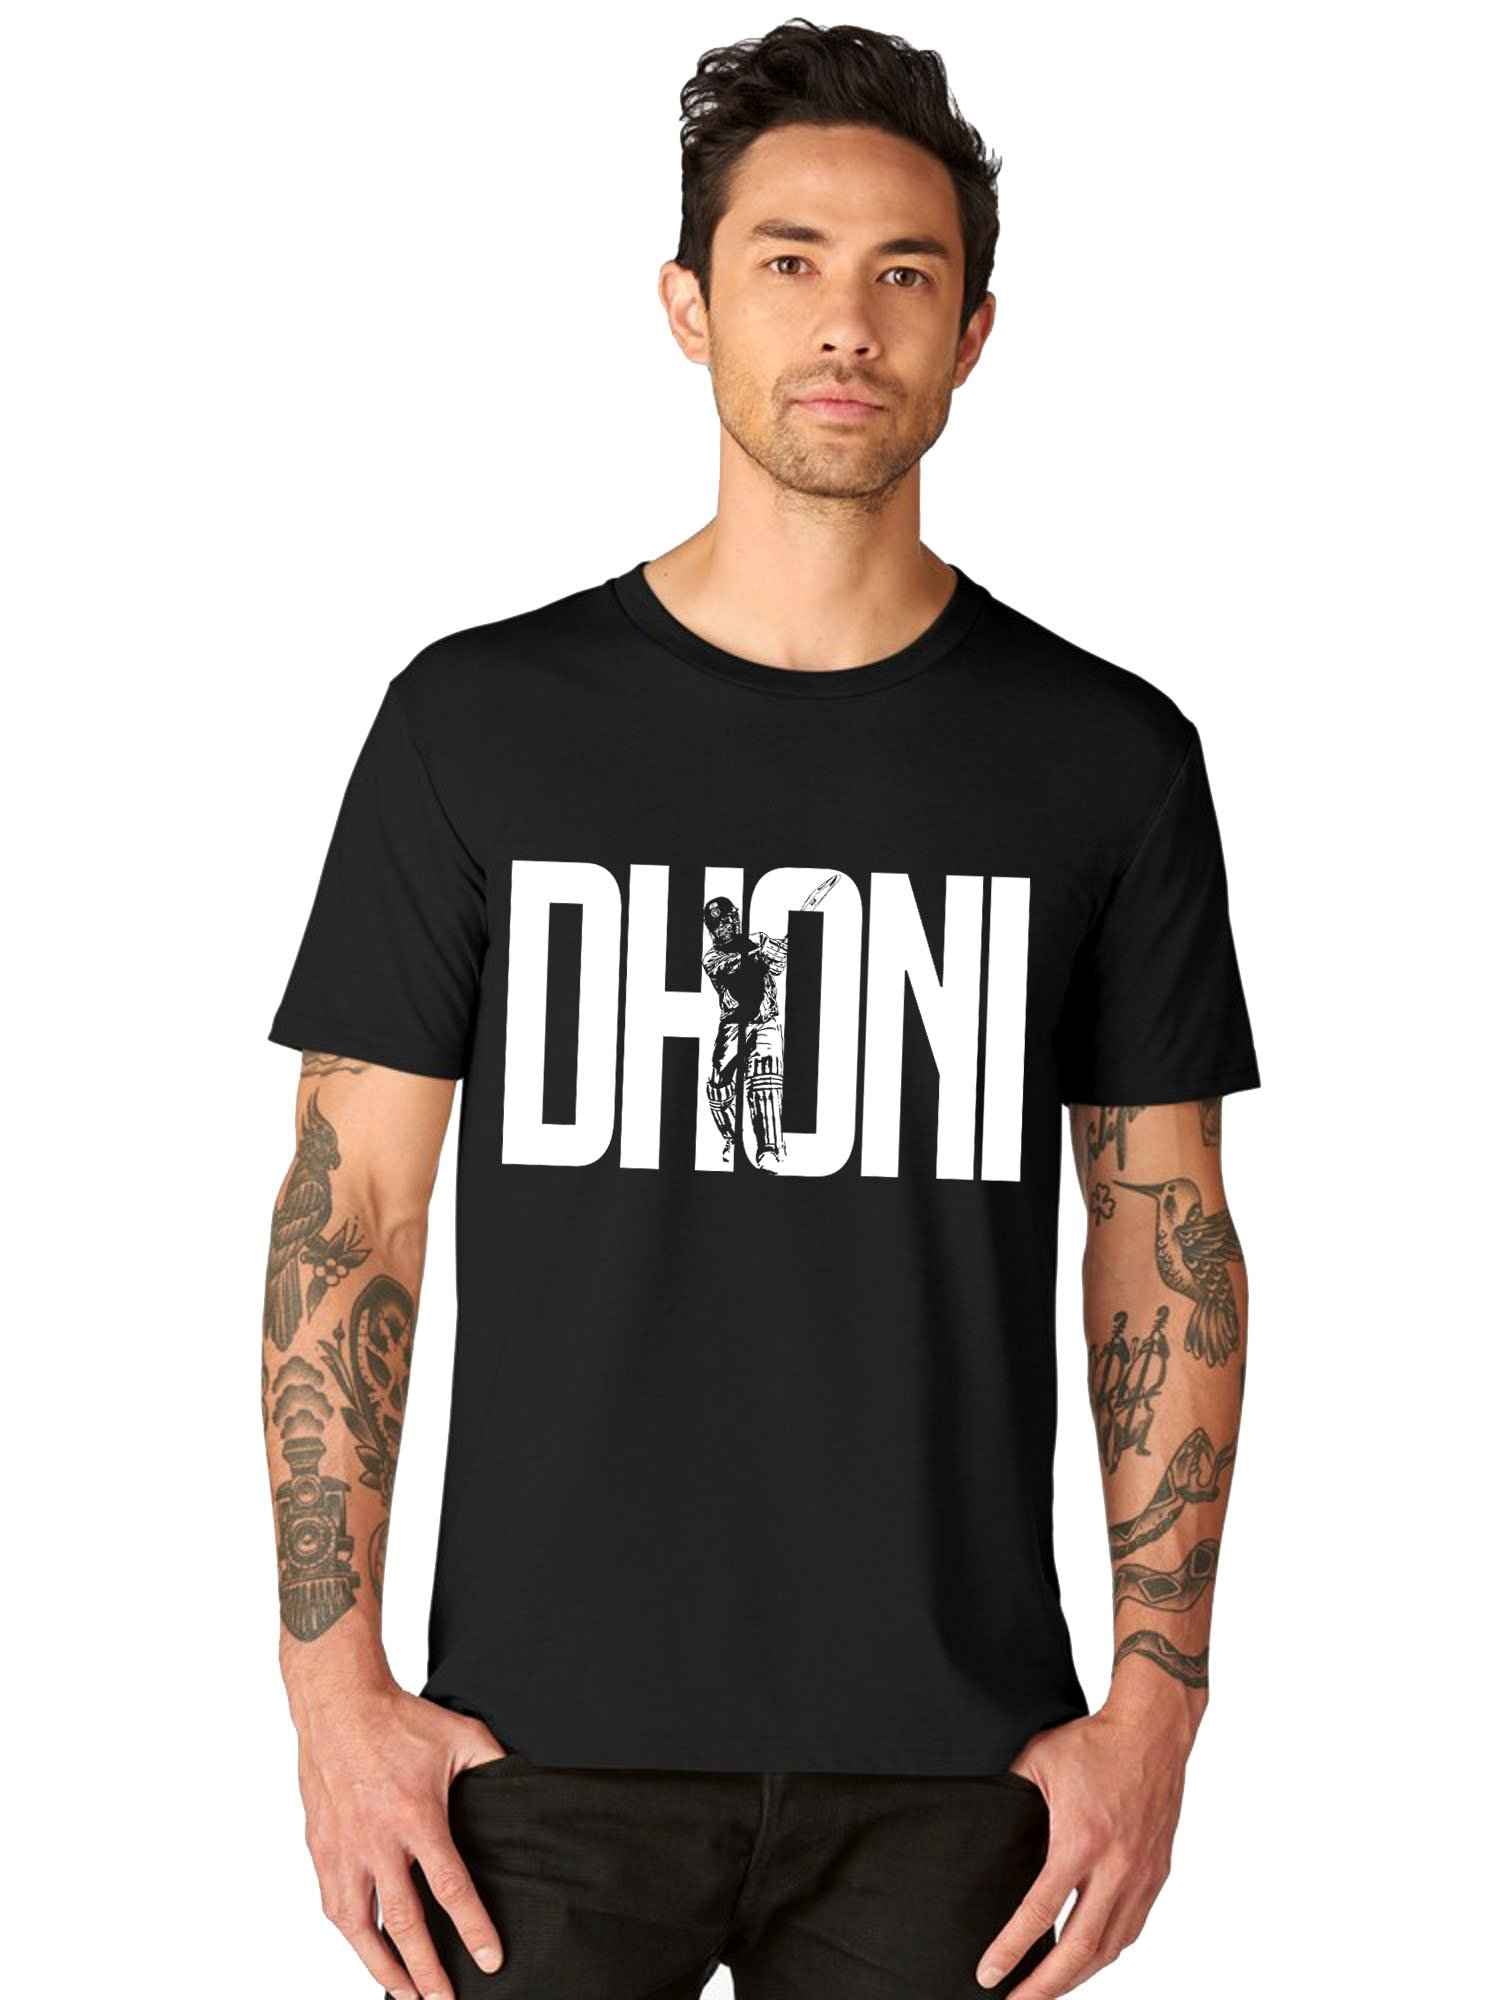 dhoni t shirt online